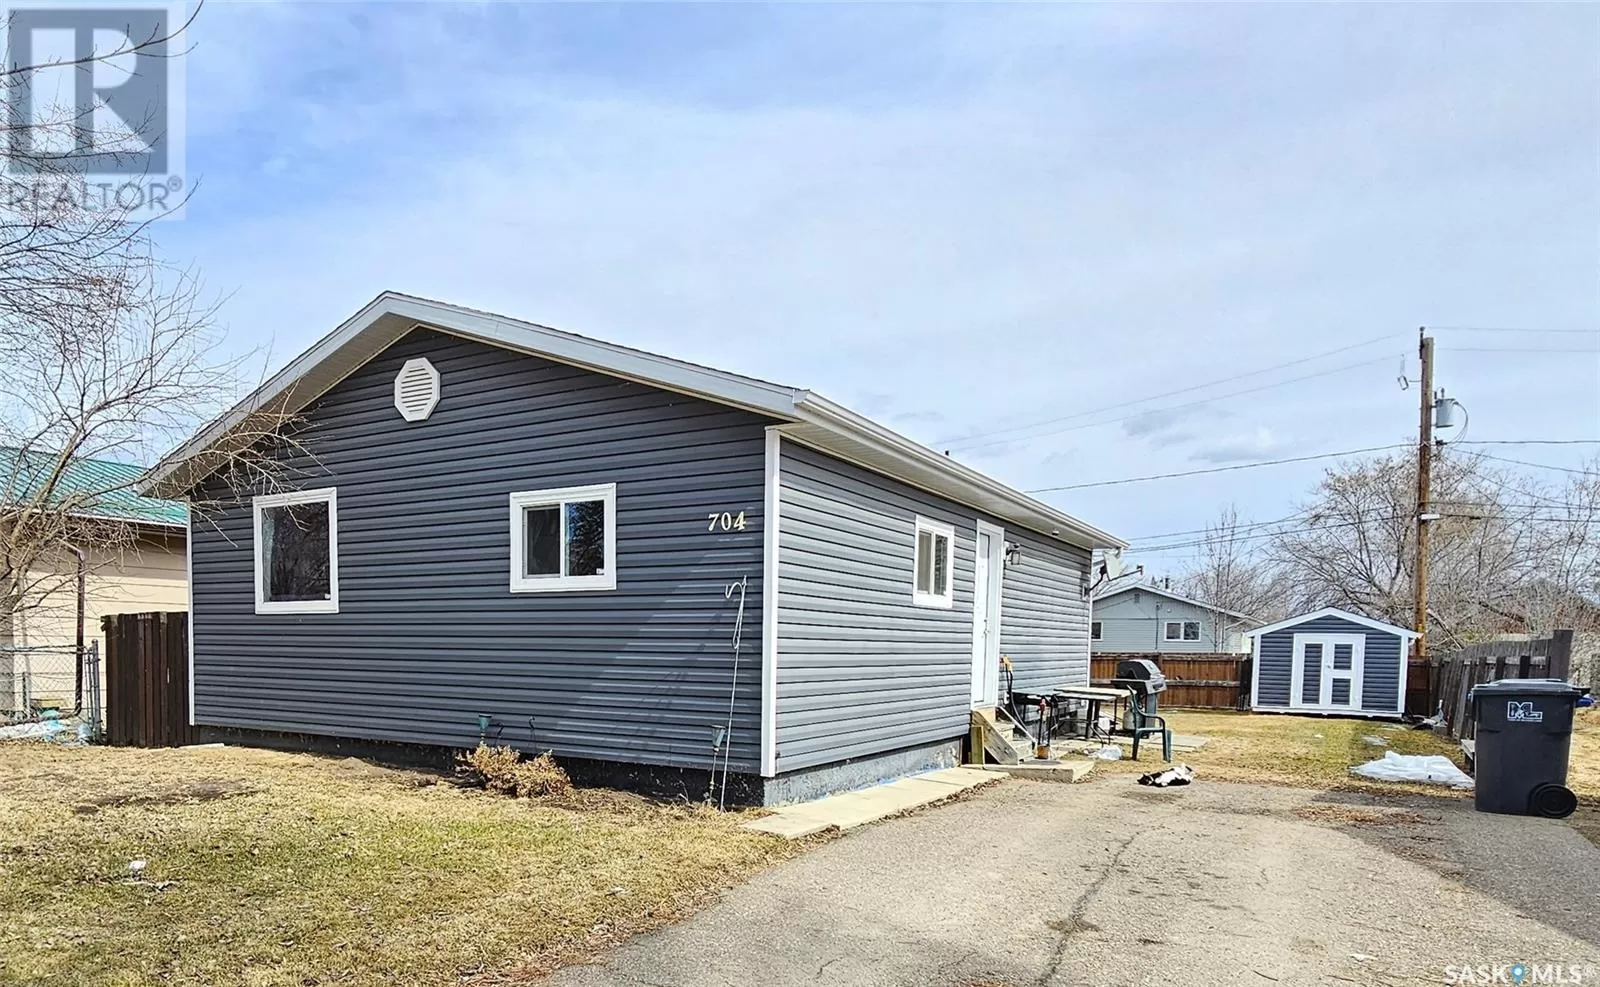 House for rent: 704 1st Street E, Meadow Lake, Saskatchewan S9X 1A3